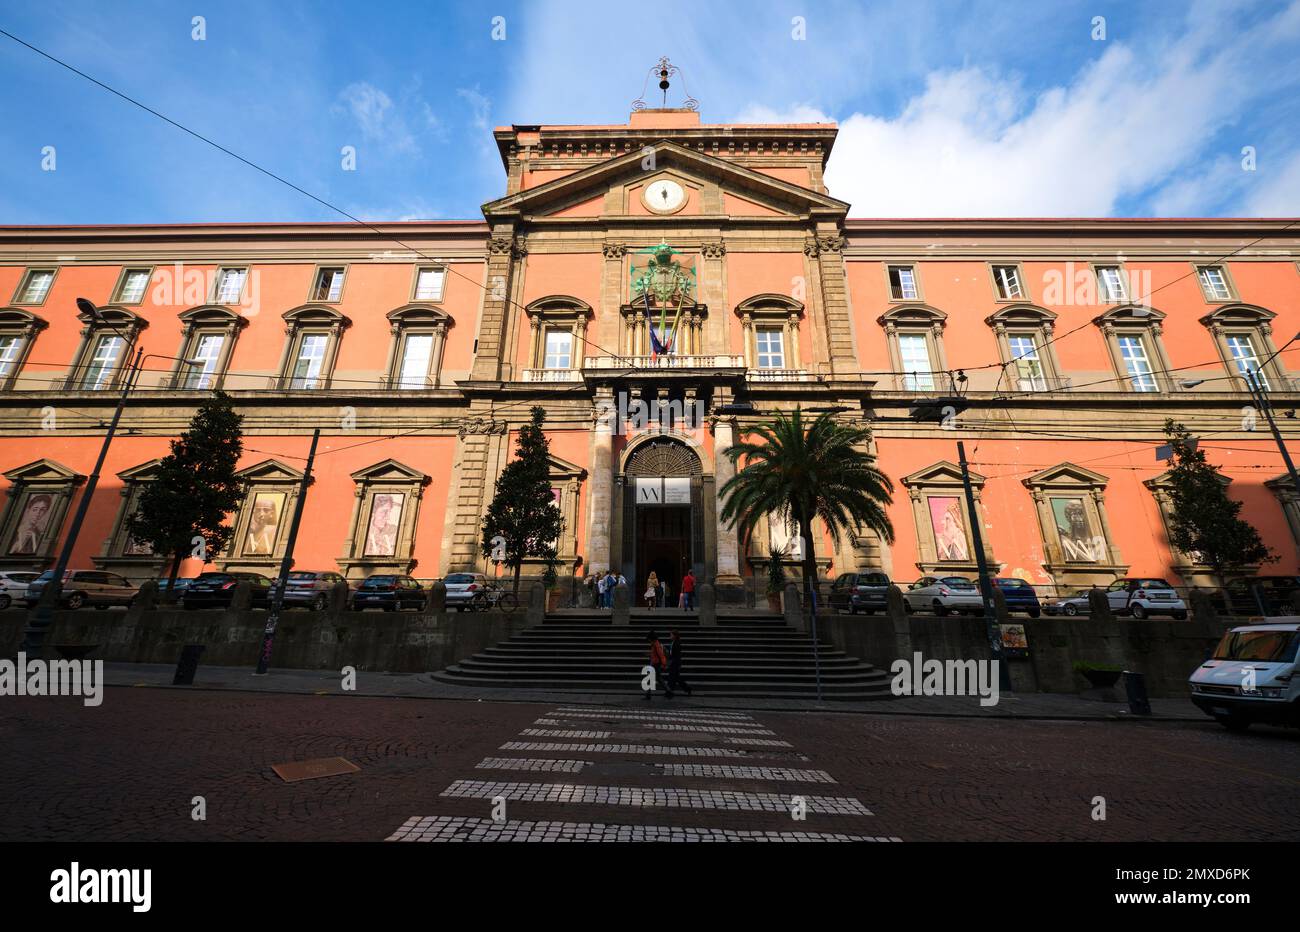 Der Blick auf die traditionelle, rote barocke Fassade am Eingang. Im Archäologischen Museum, Museo Archeologico Nazionale di Napoli, in Neapel, Italien. Stockfoto